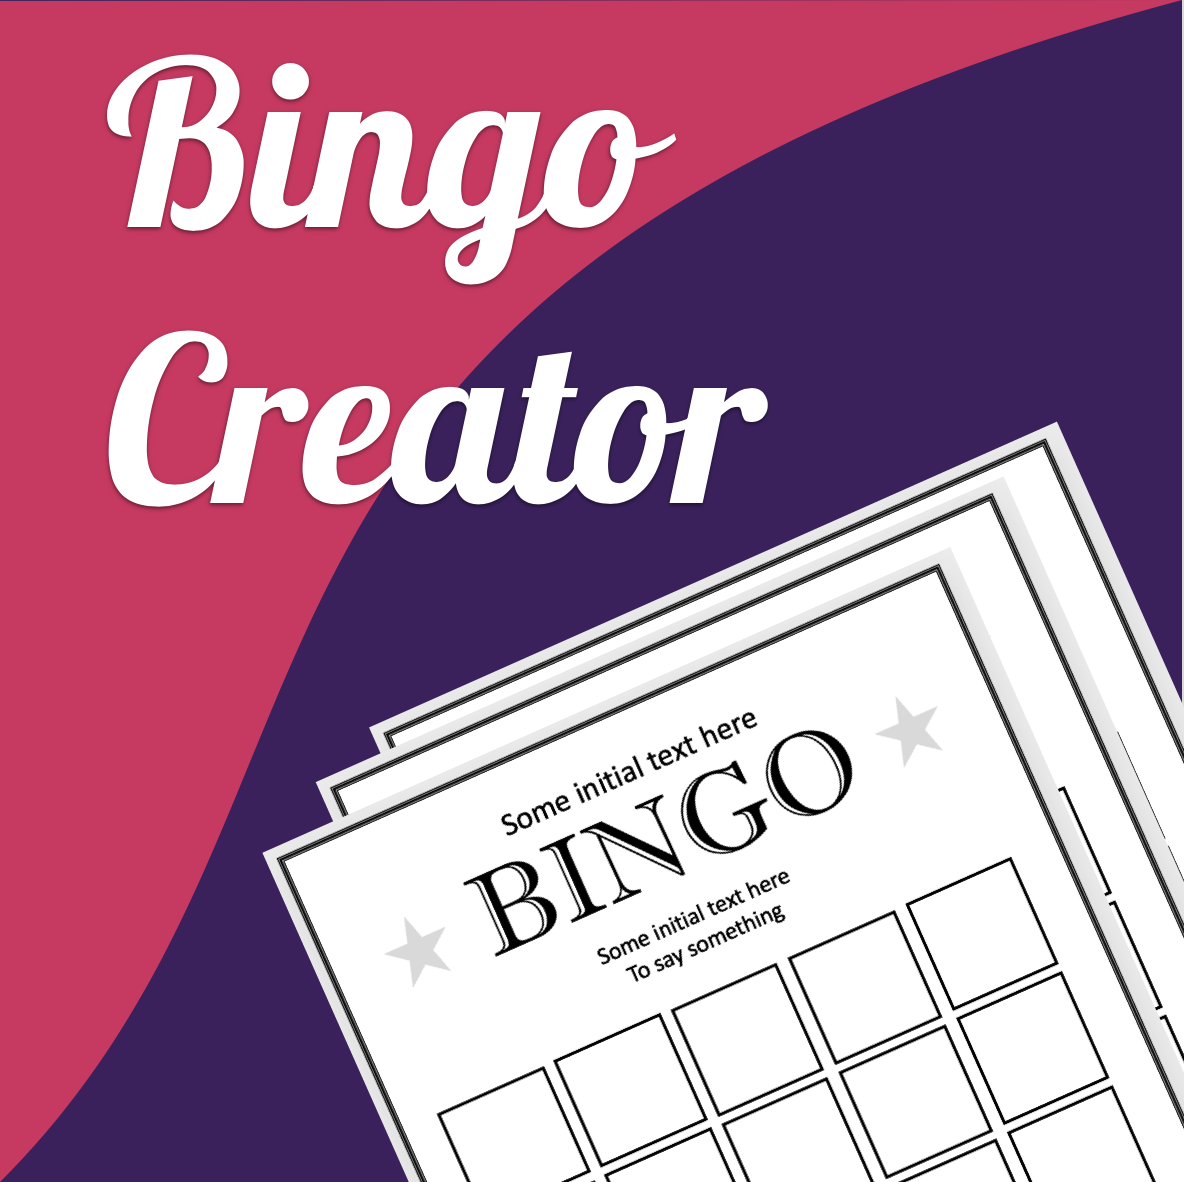 Bingo Creator